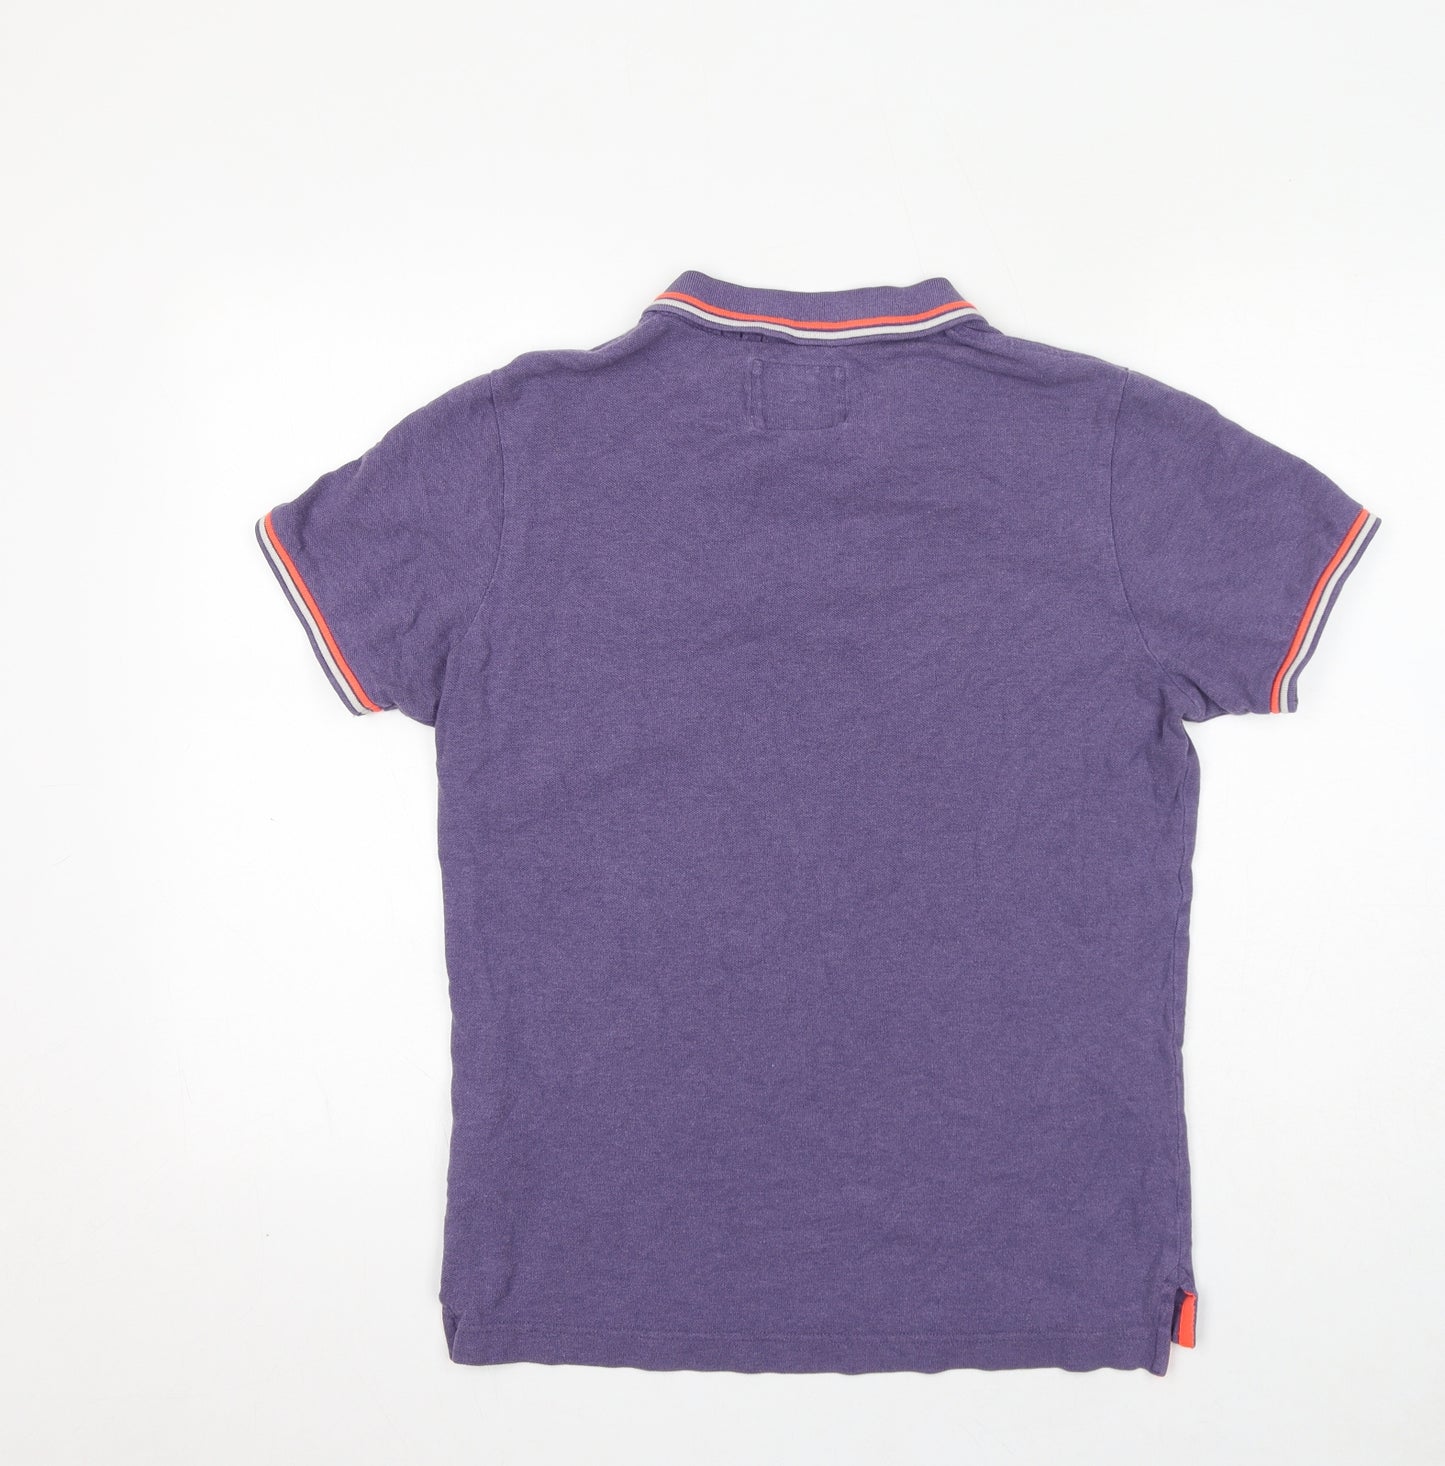 Superdry Mens Purple 100% Cotton Polo Size L Collared Button